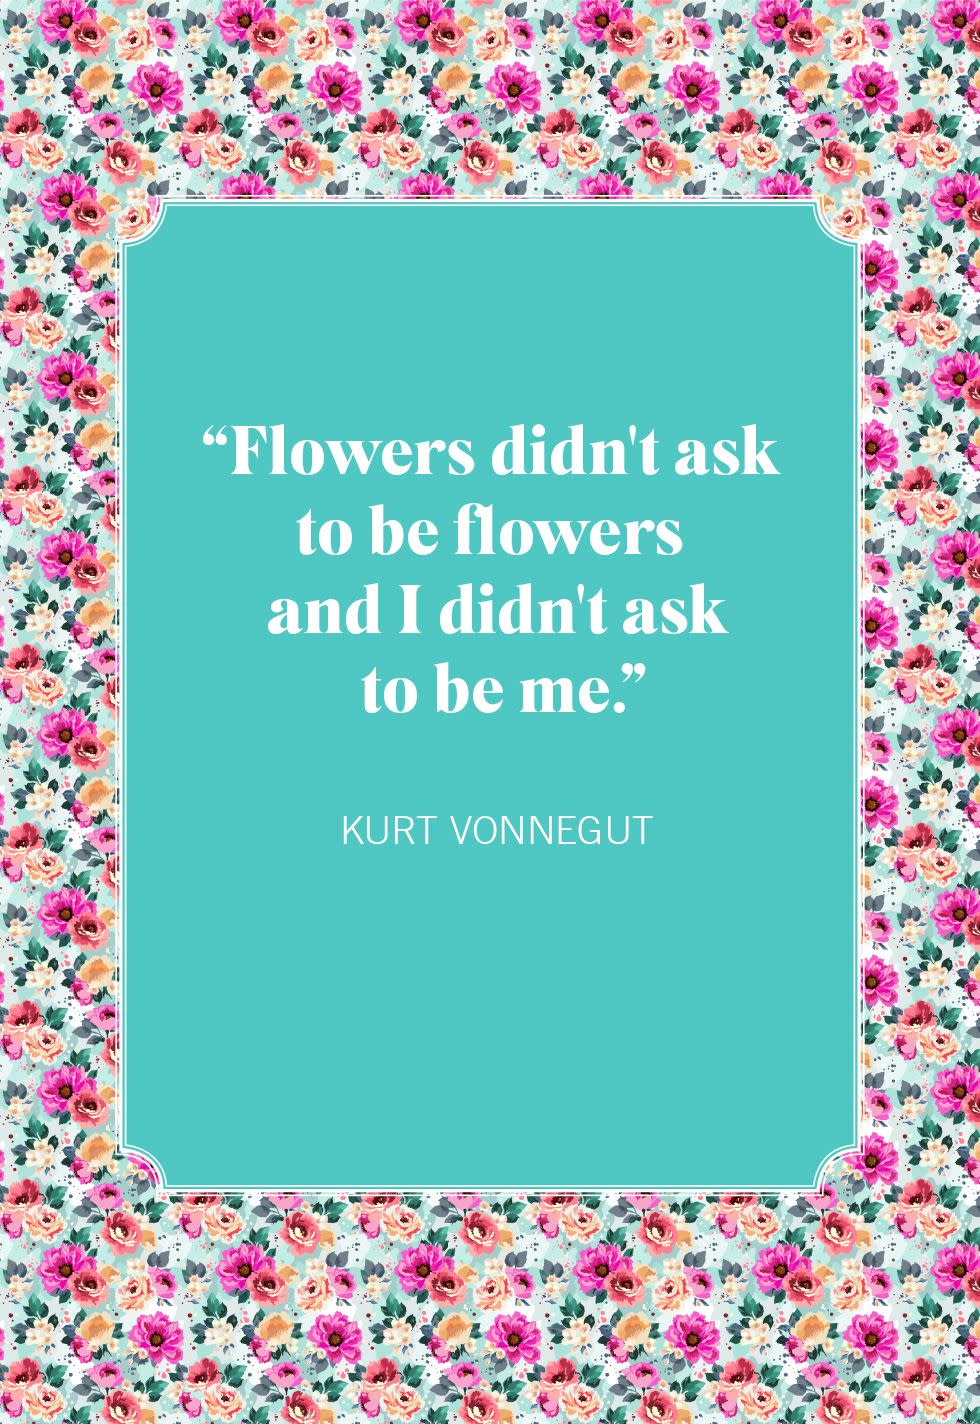 kurt vonnegut flower quotes